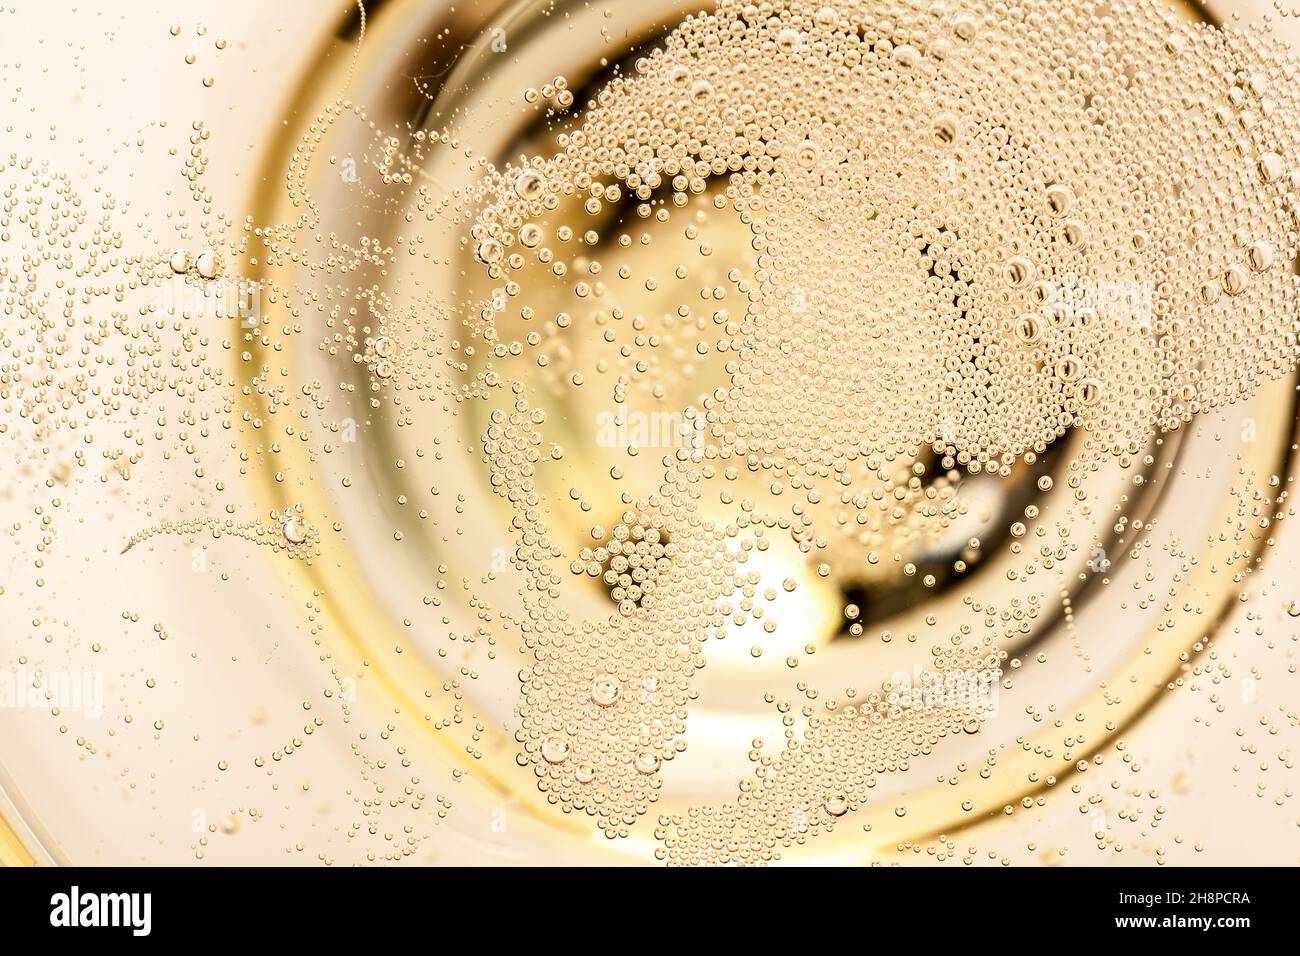 Macro de champán en una copa de vidrio, vino espumoso, champán, burbujas, detalle, ascender, múltiple, blanco, fondo Foto de stock